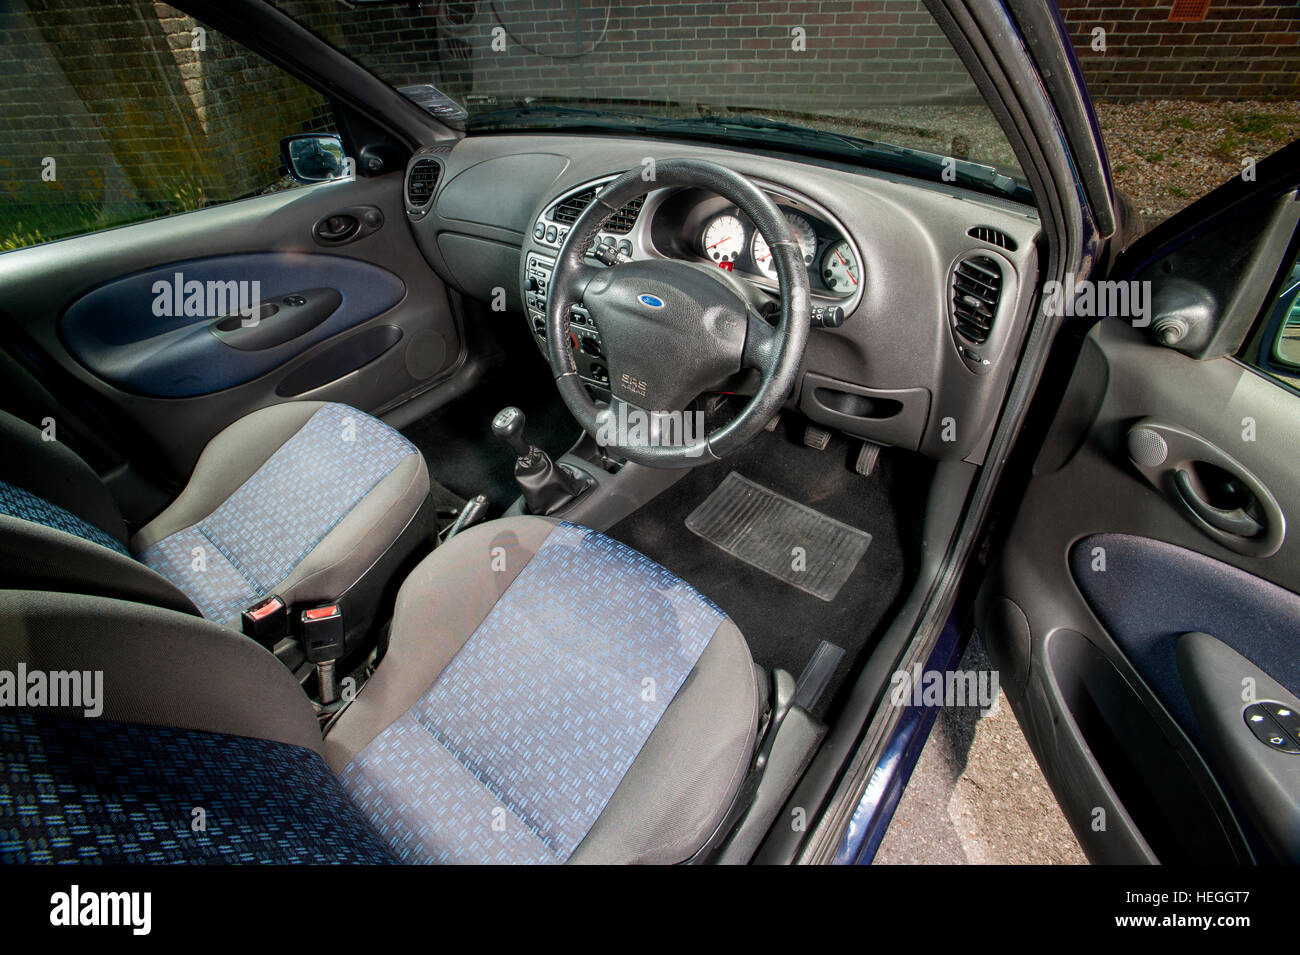 2002 mk5 Ford Fiesta small hatchback car interior Stock Photo - Alamy